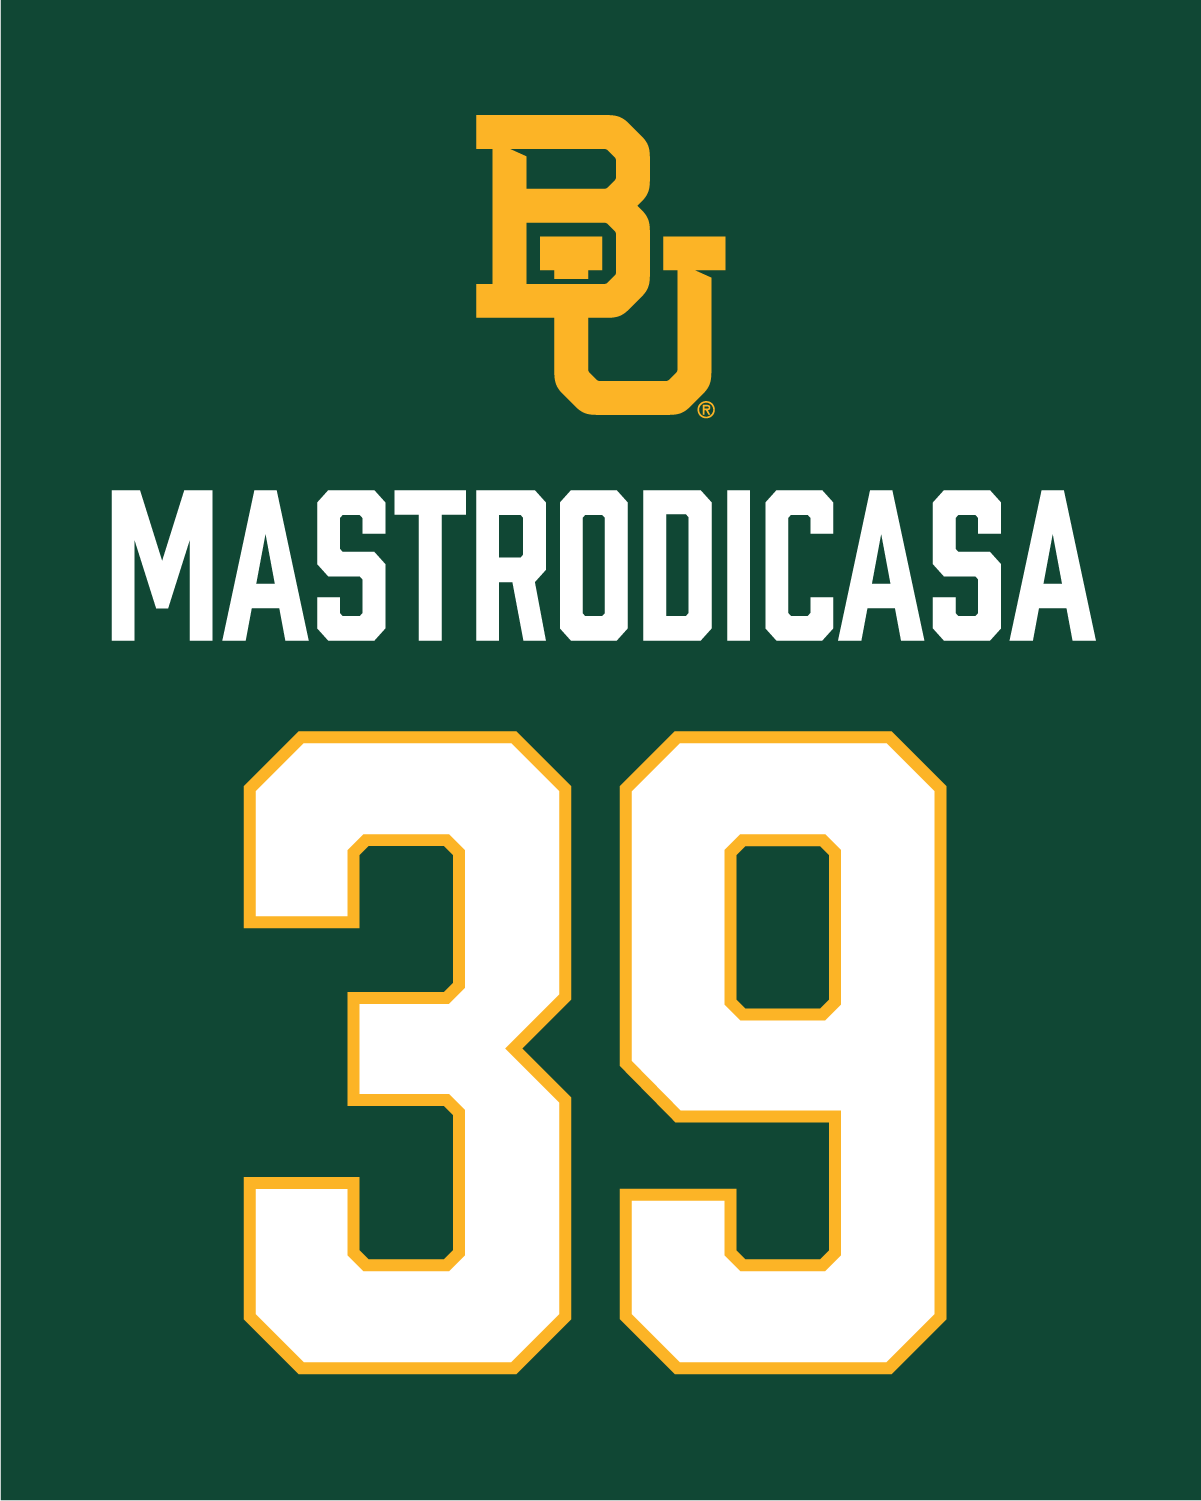 Michael Mastrodicasa | #39